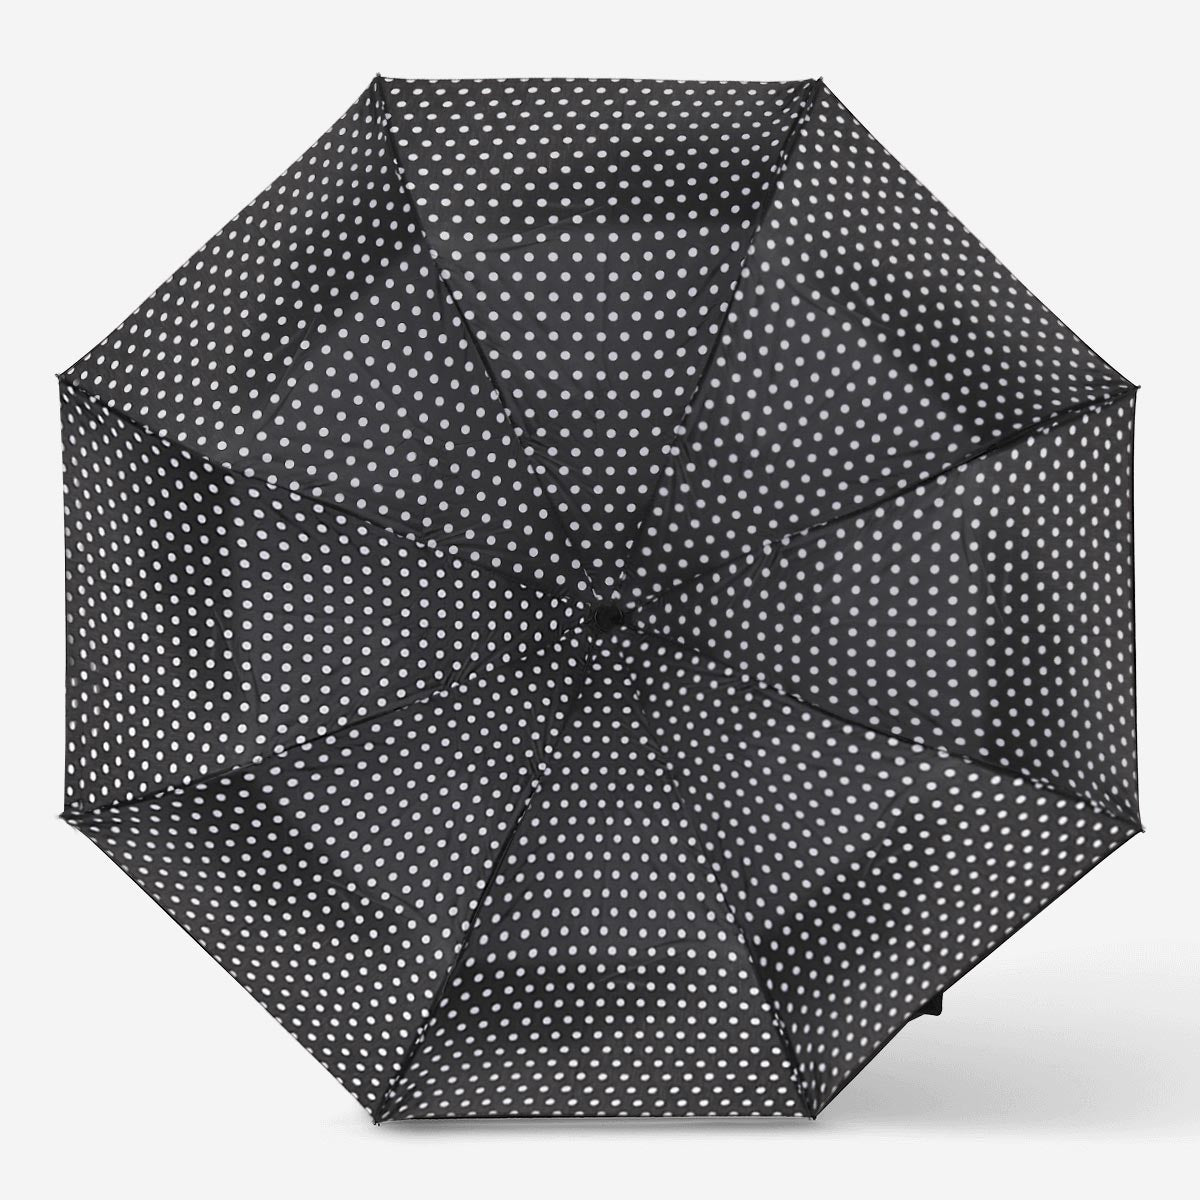 Umbrella with dots design Textile Flying Tiger Copenhagen 